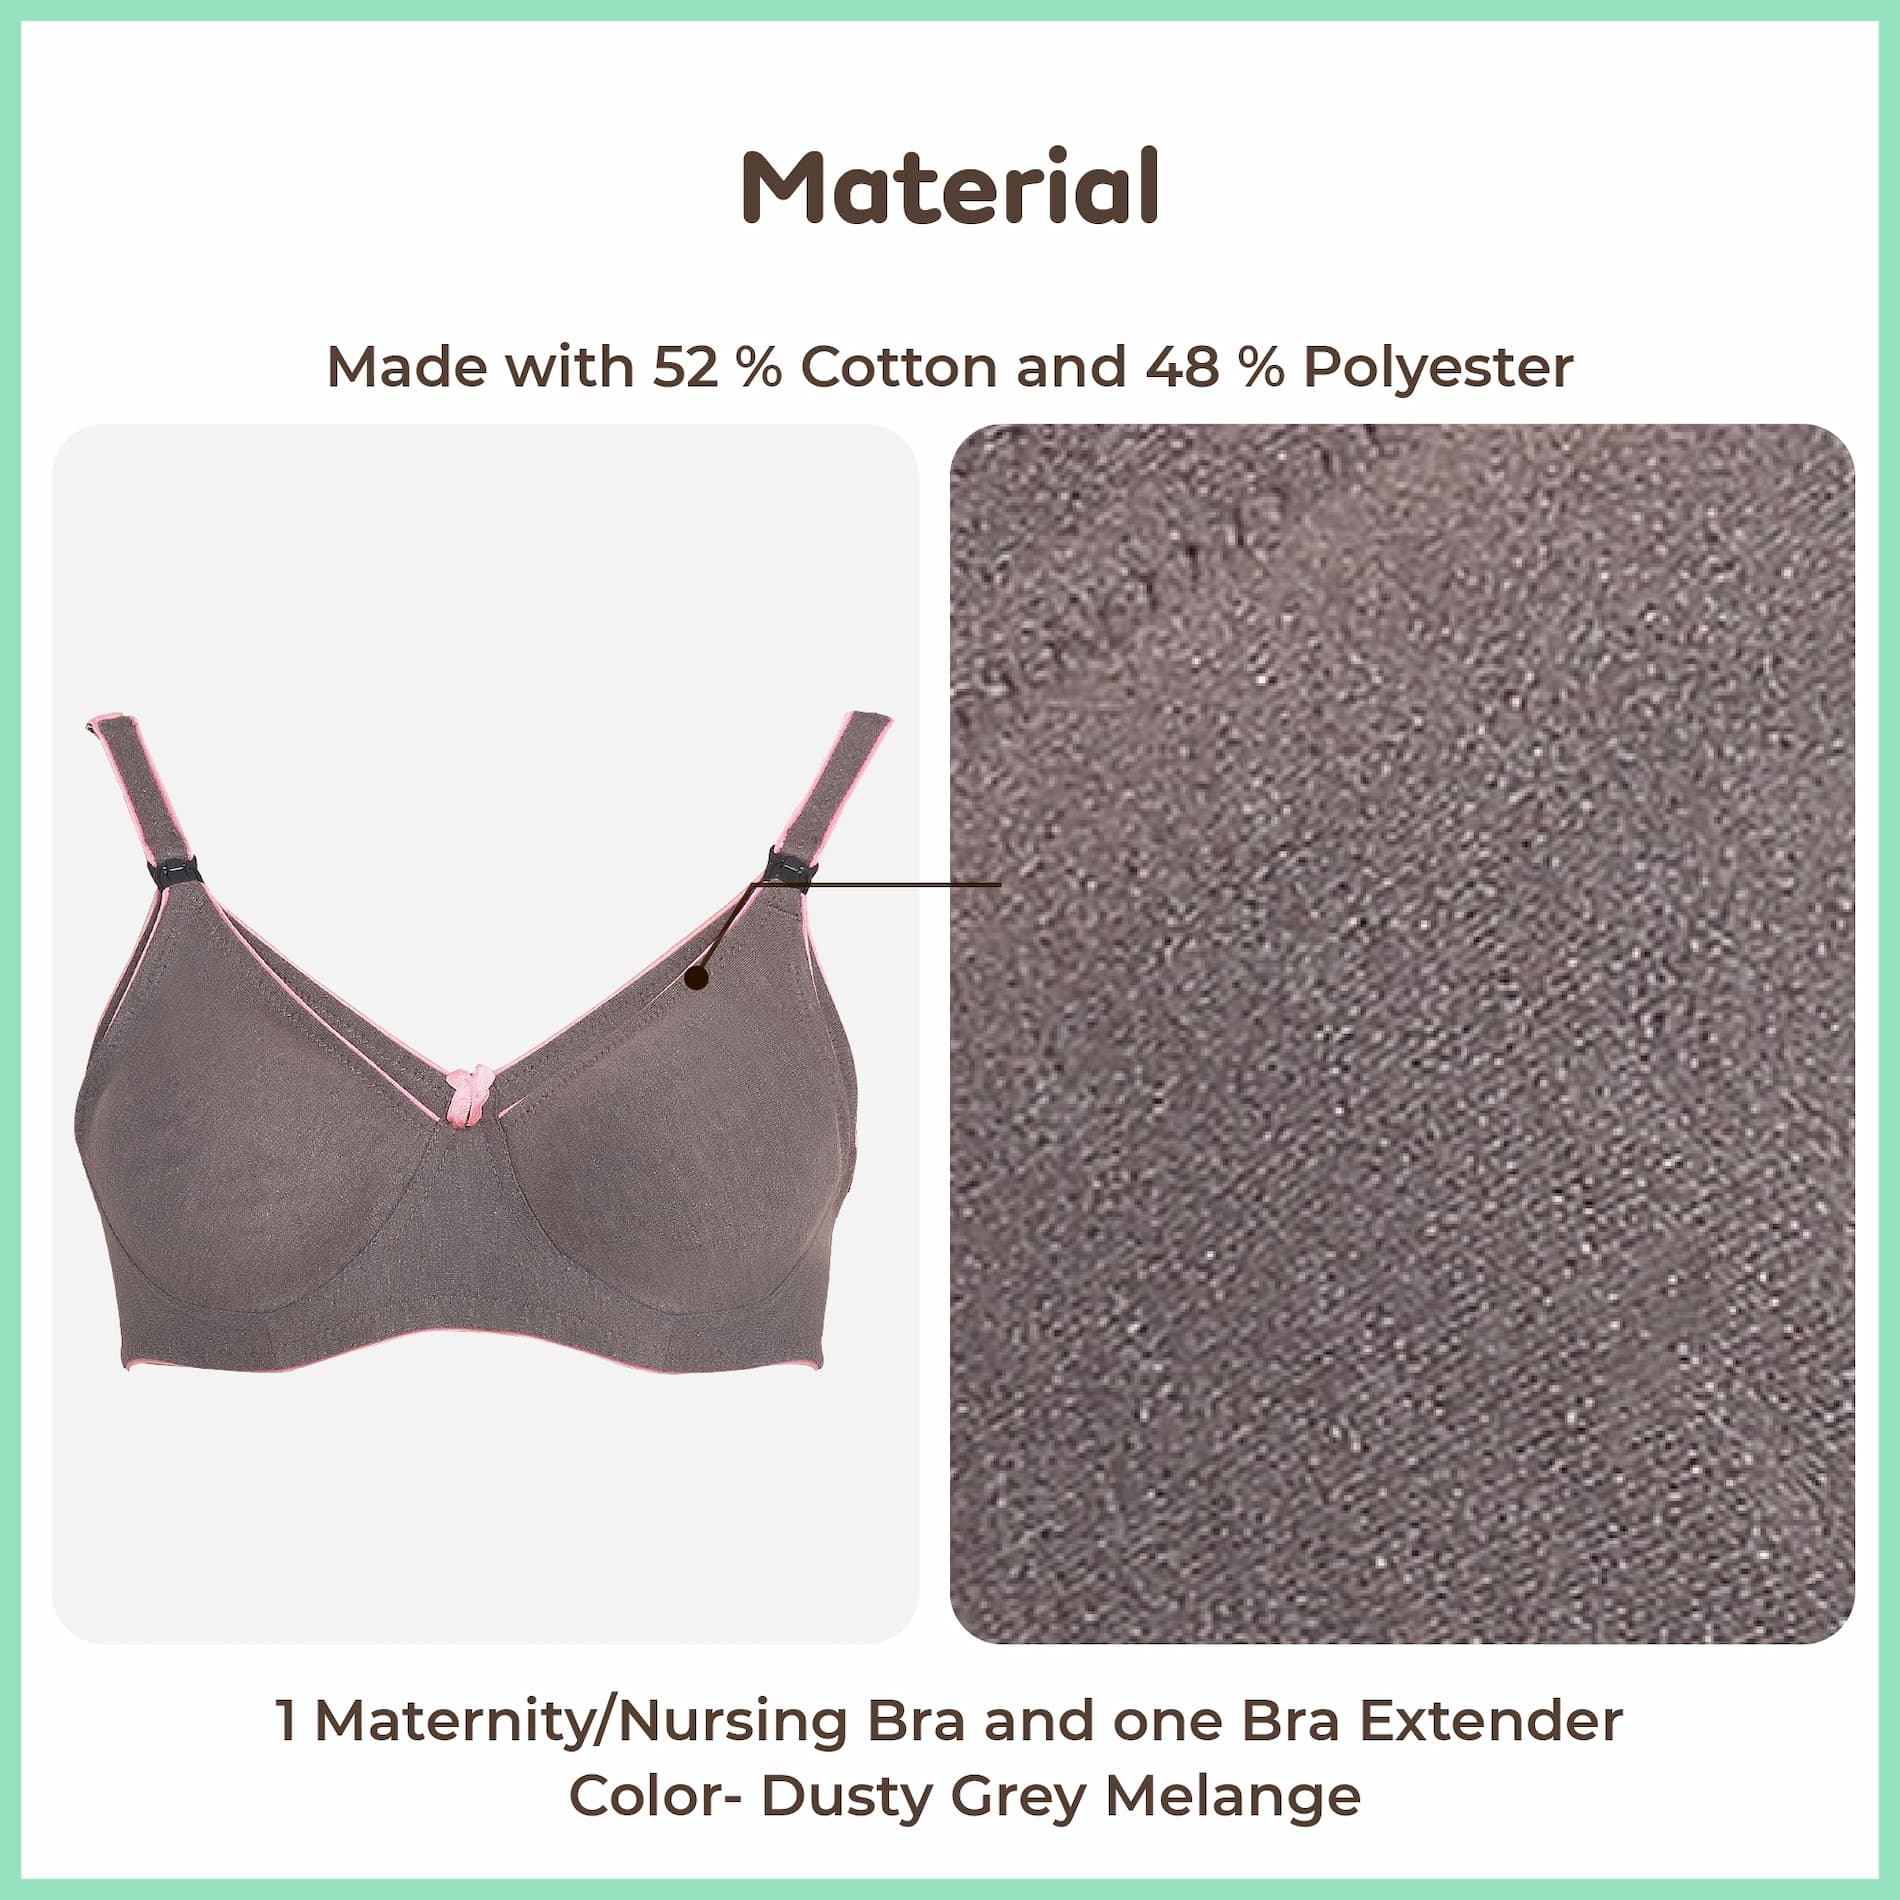 Mylo Maternity/Nursing Moulded Cup Extra Comfort Bra with free Bra Extender - Dusty Grey Melange 32B 